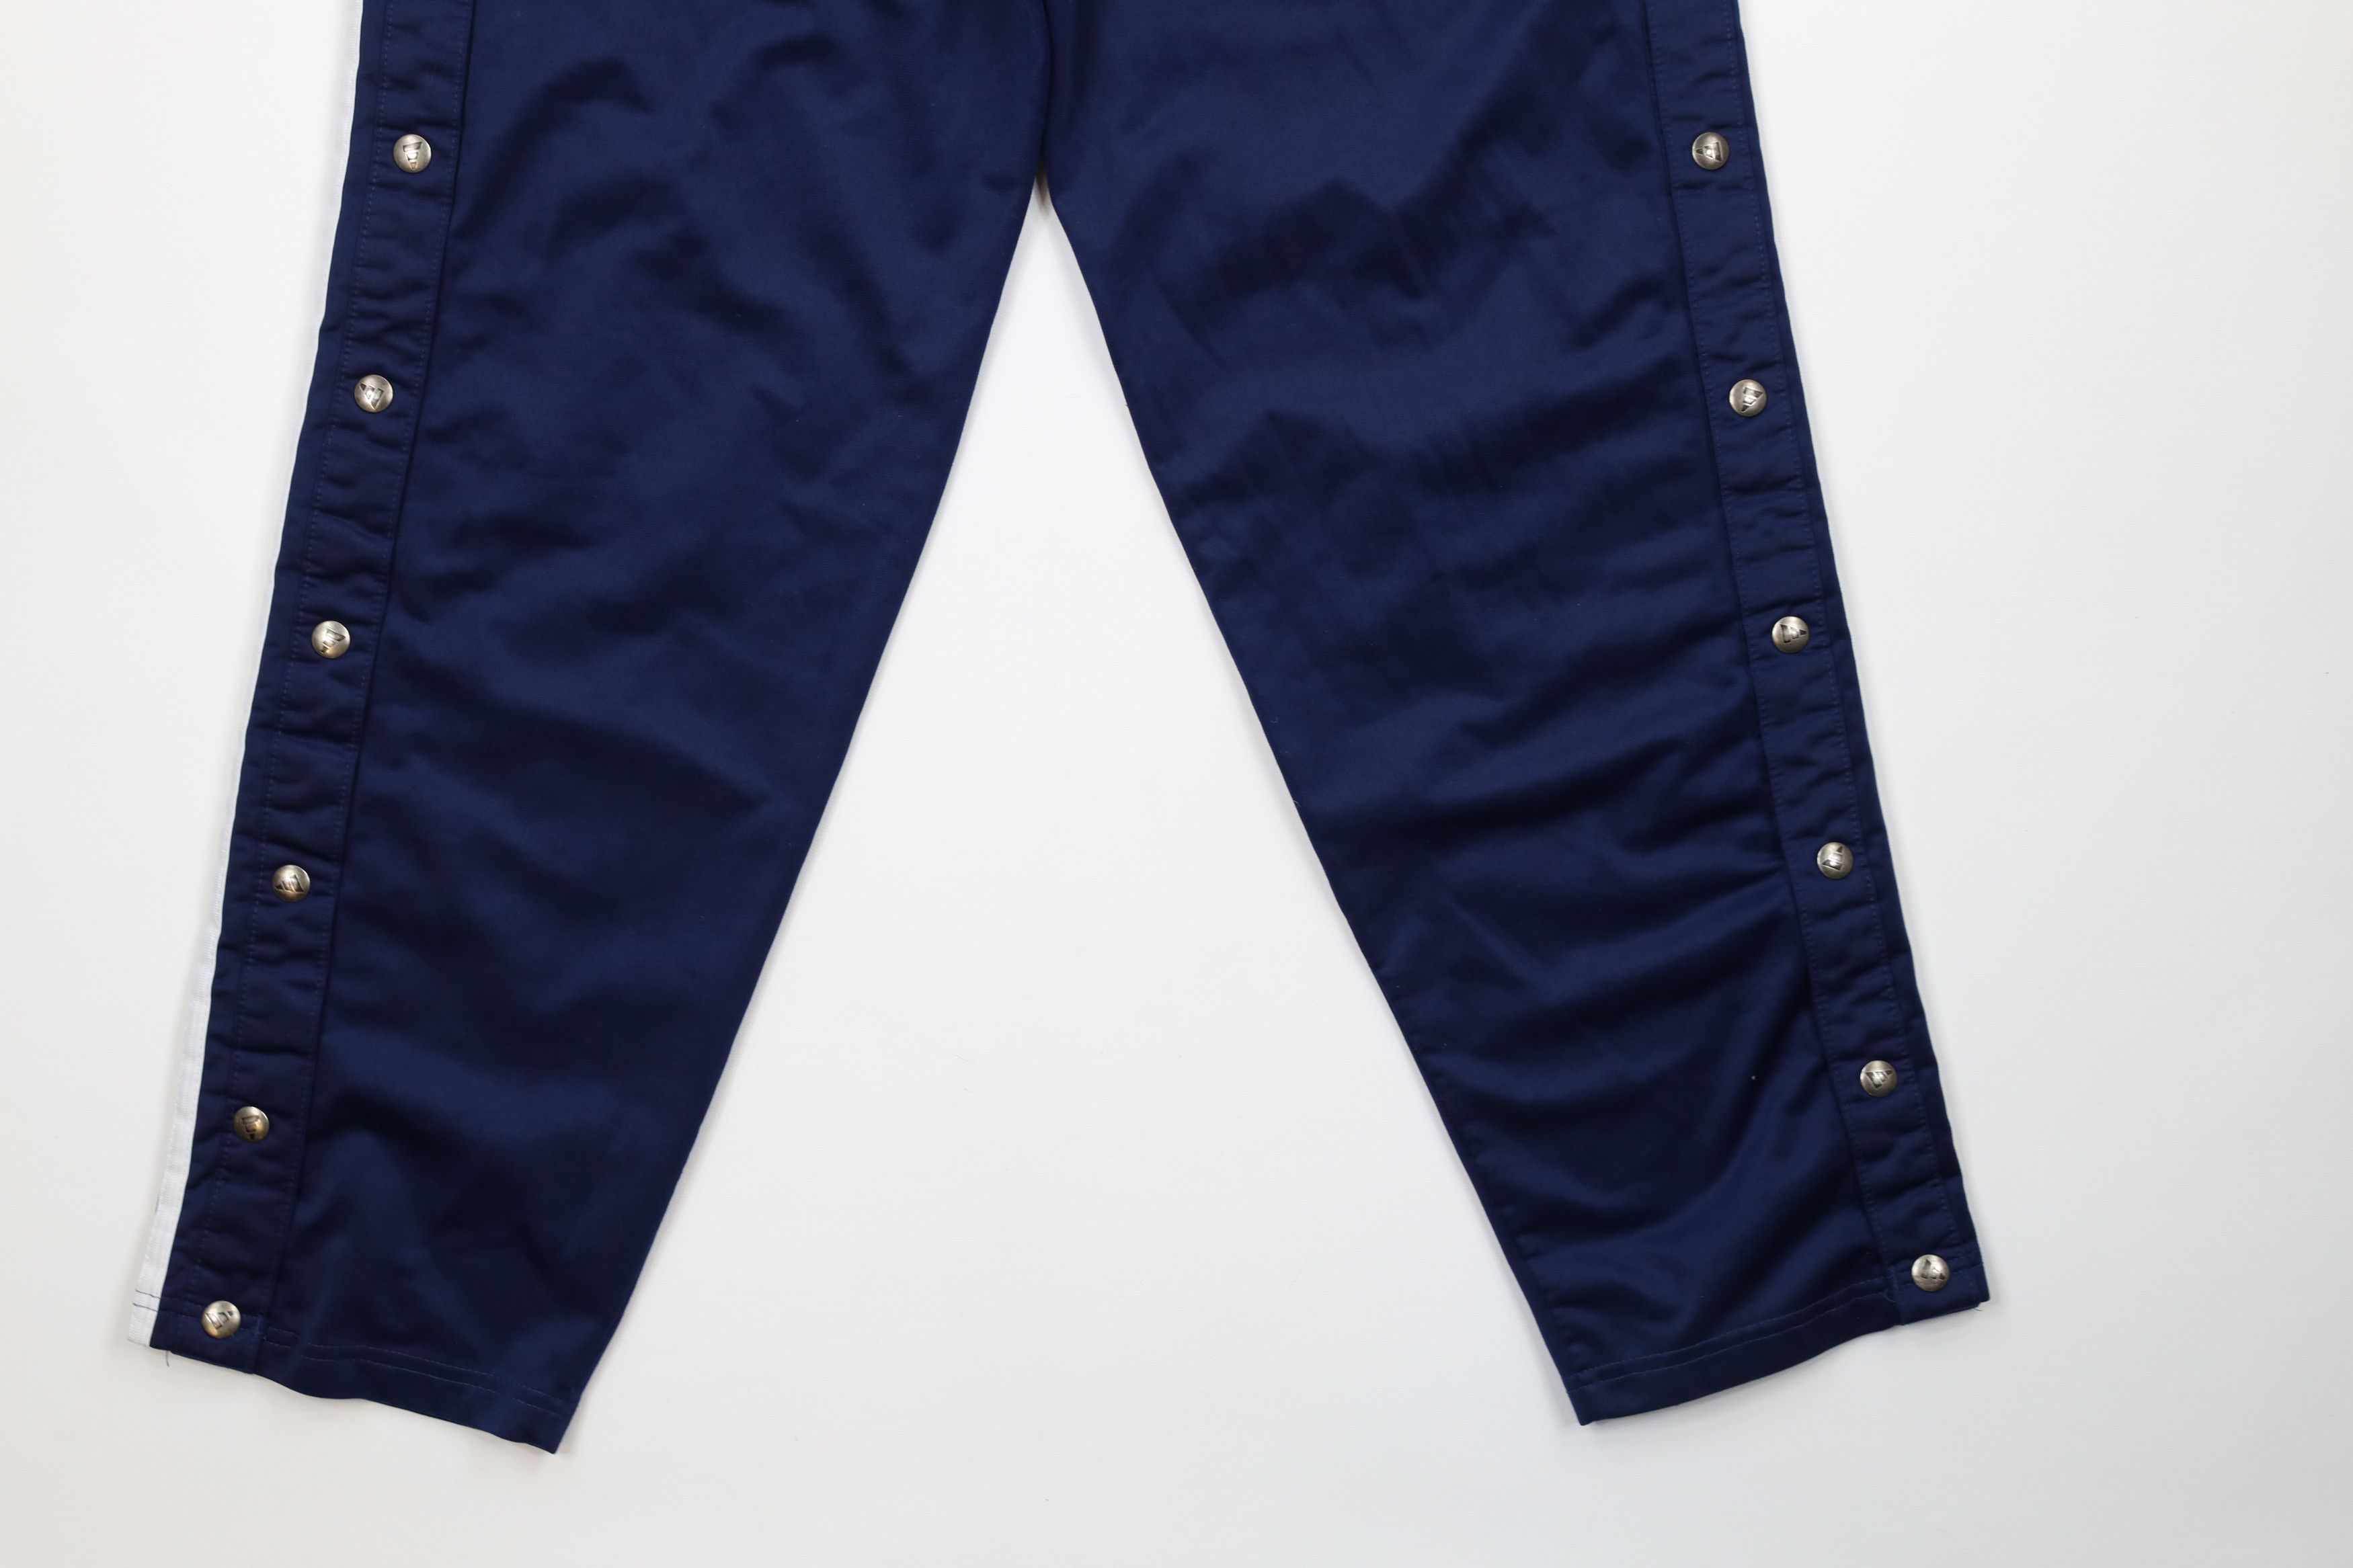 Adidas Vintage 90s Adidas Striped Tearaway Sweatpants Pants Blue Size US 34 / EU 50 - 11 Preview